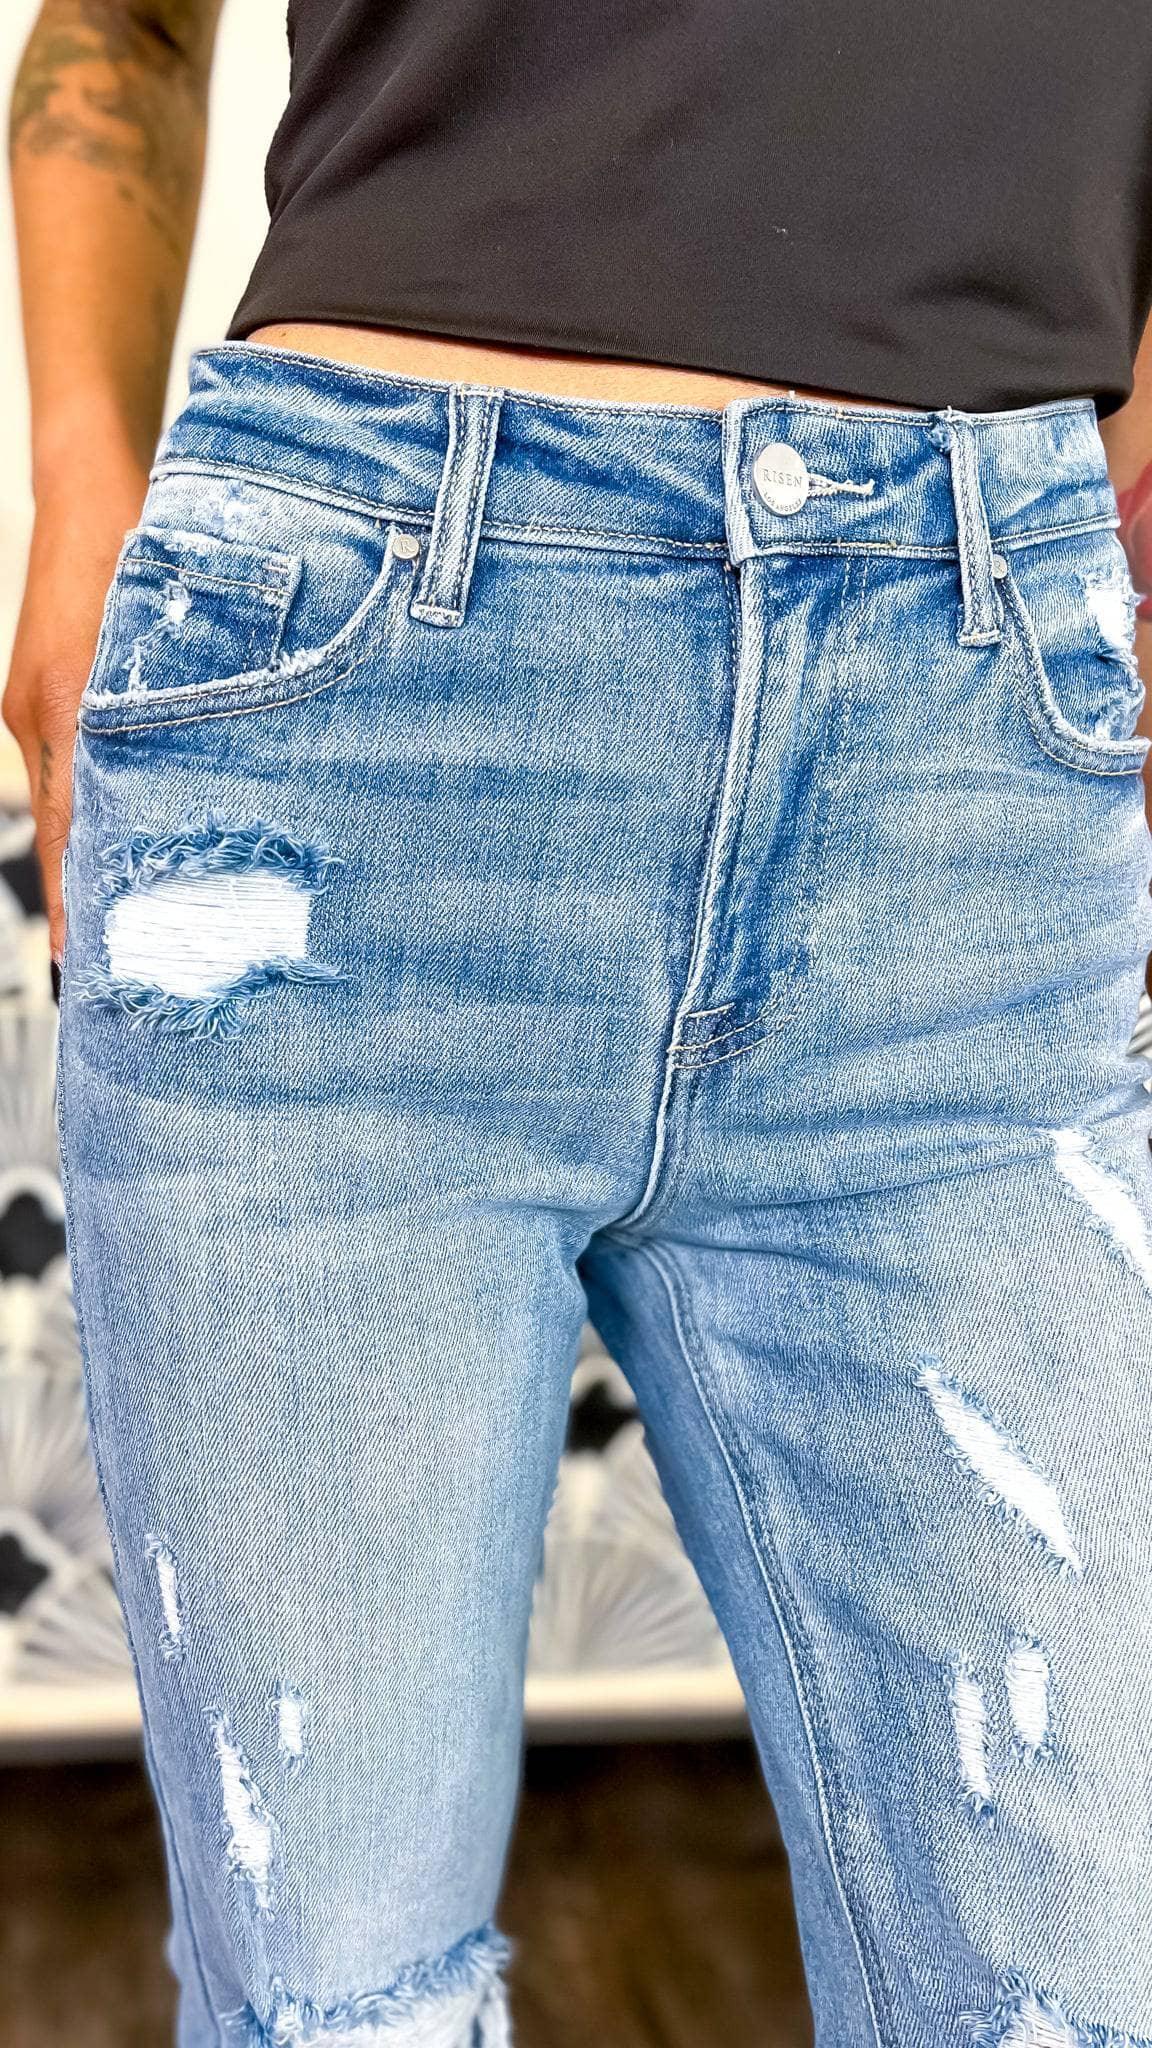 Risen RDP5097L Jeans - The ZigZag Stripe